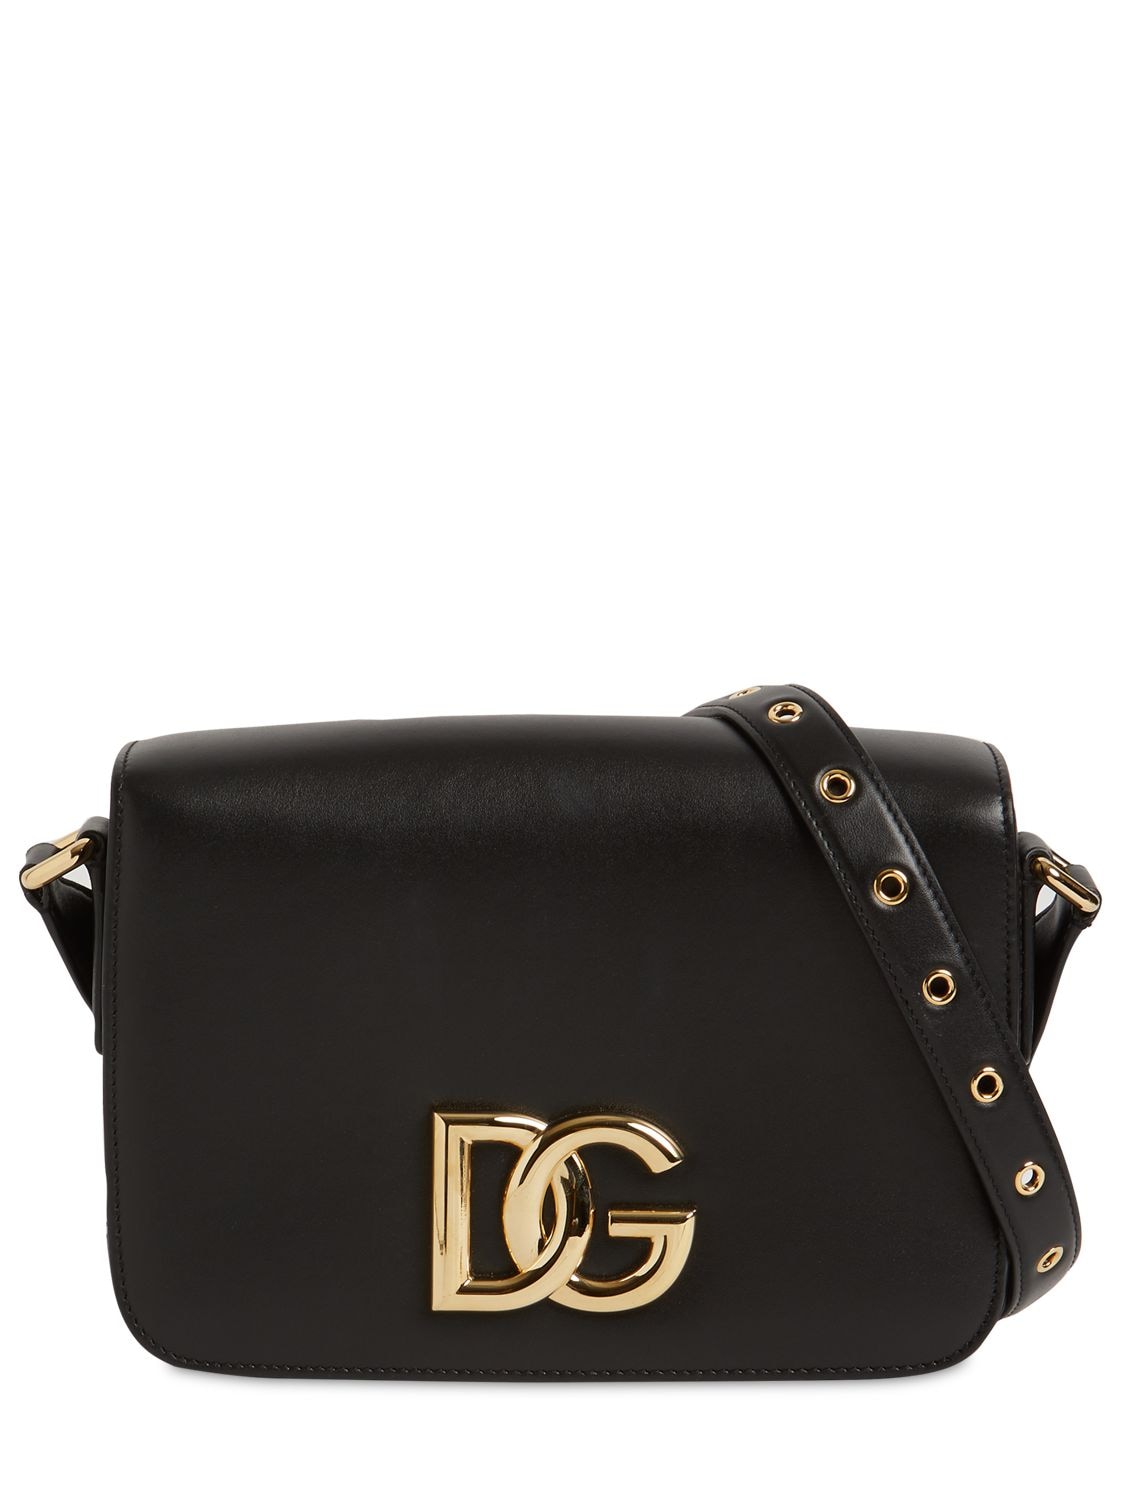 Dolce & Gabbana 3.5 Leather Bag In Black | ModeSens